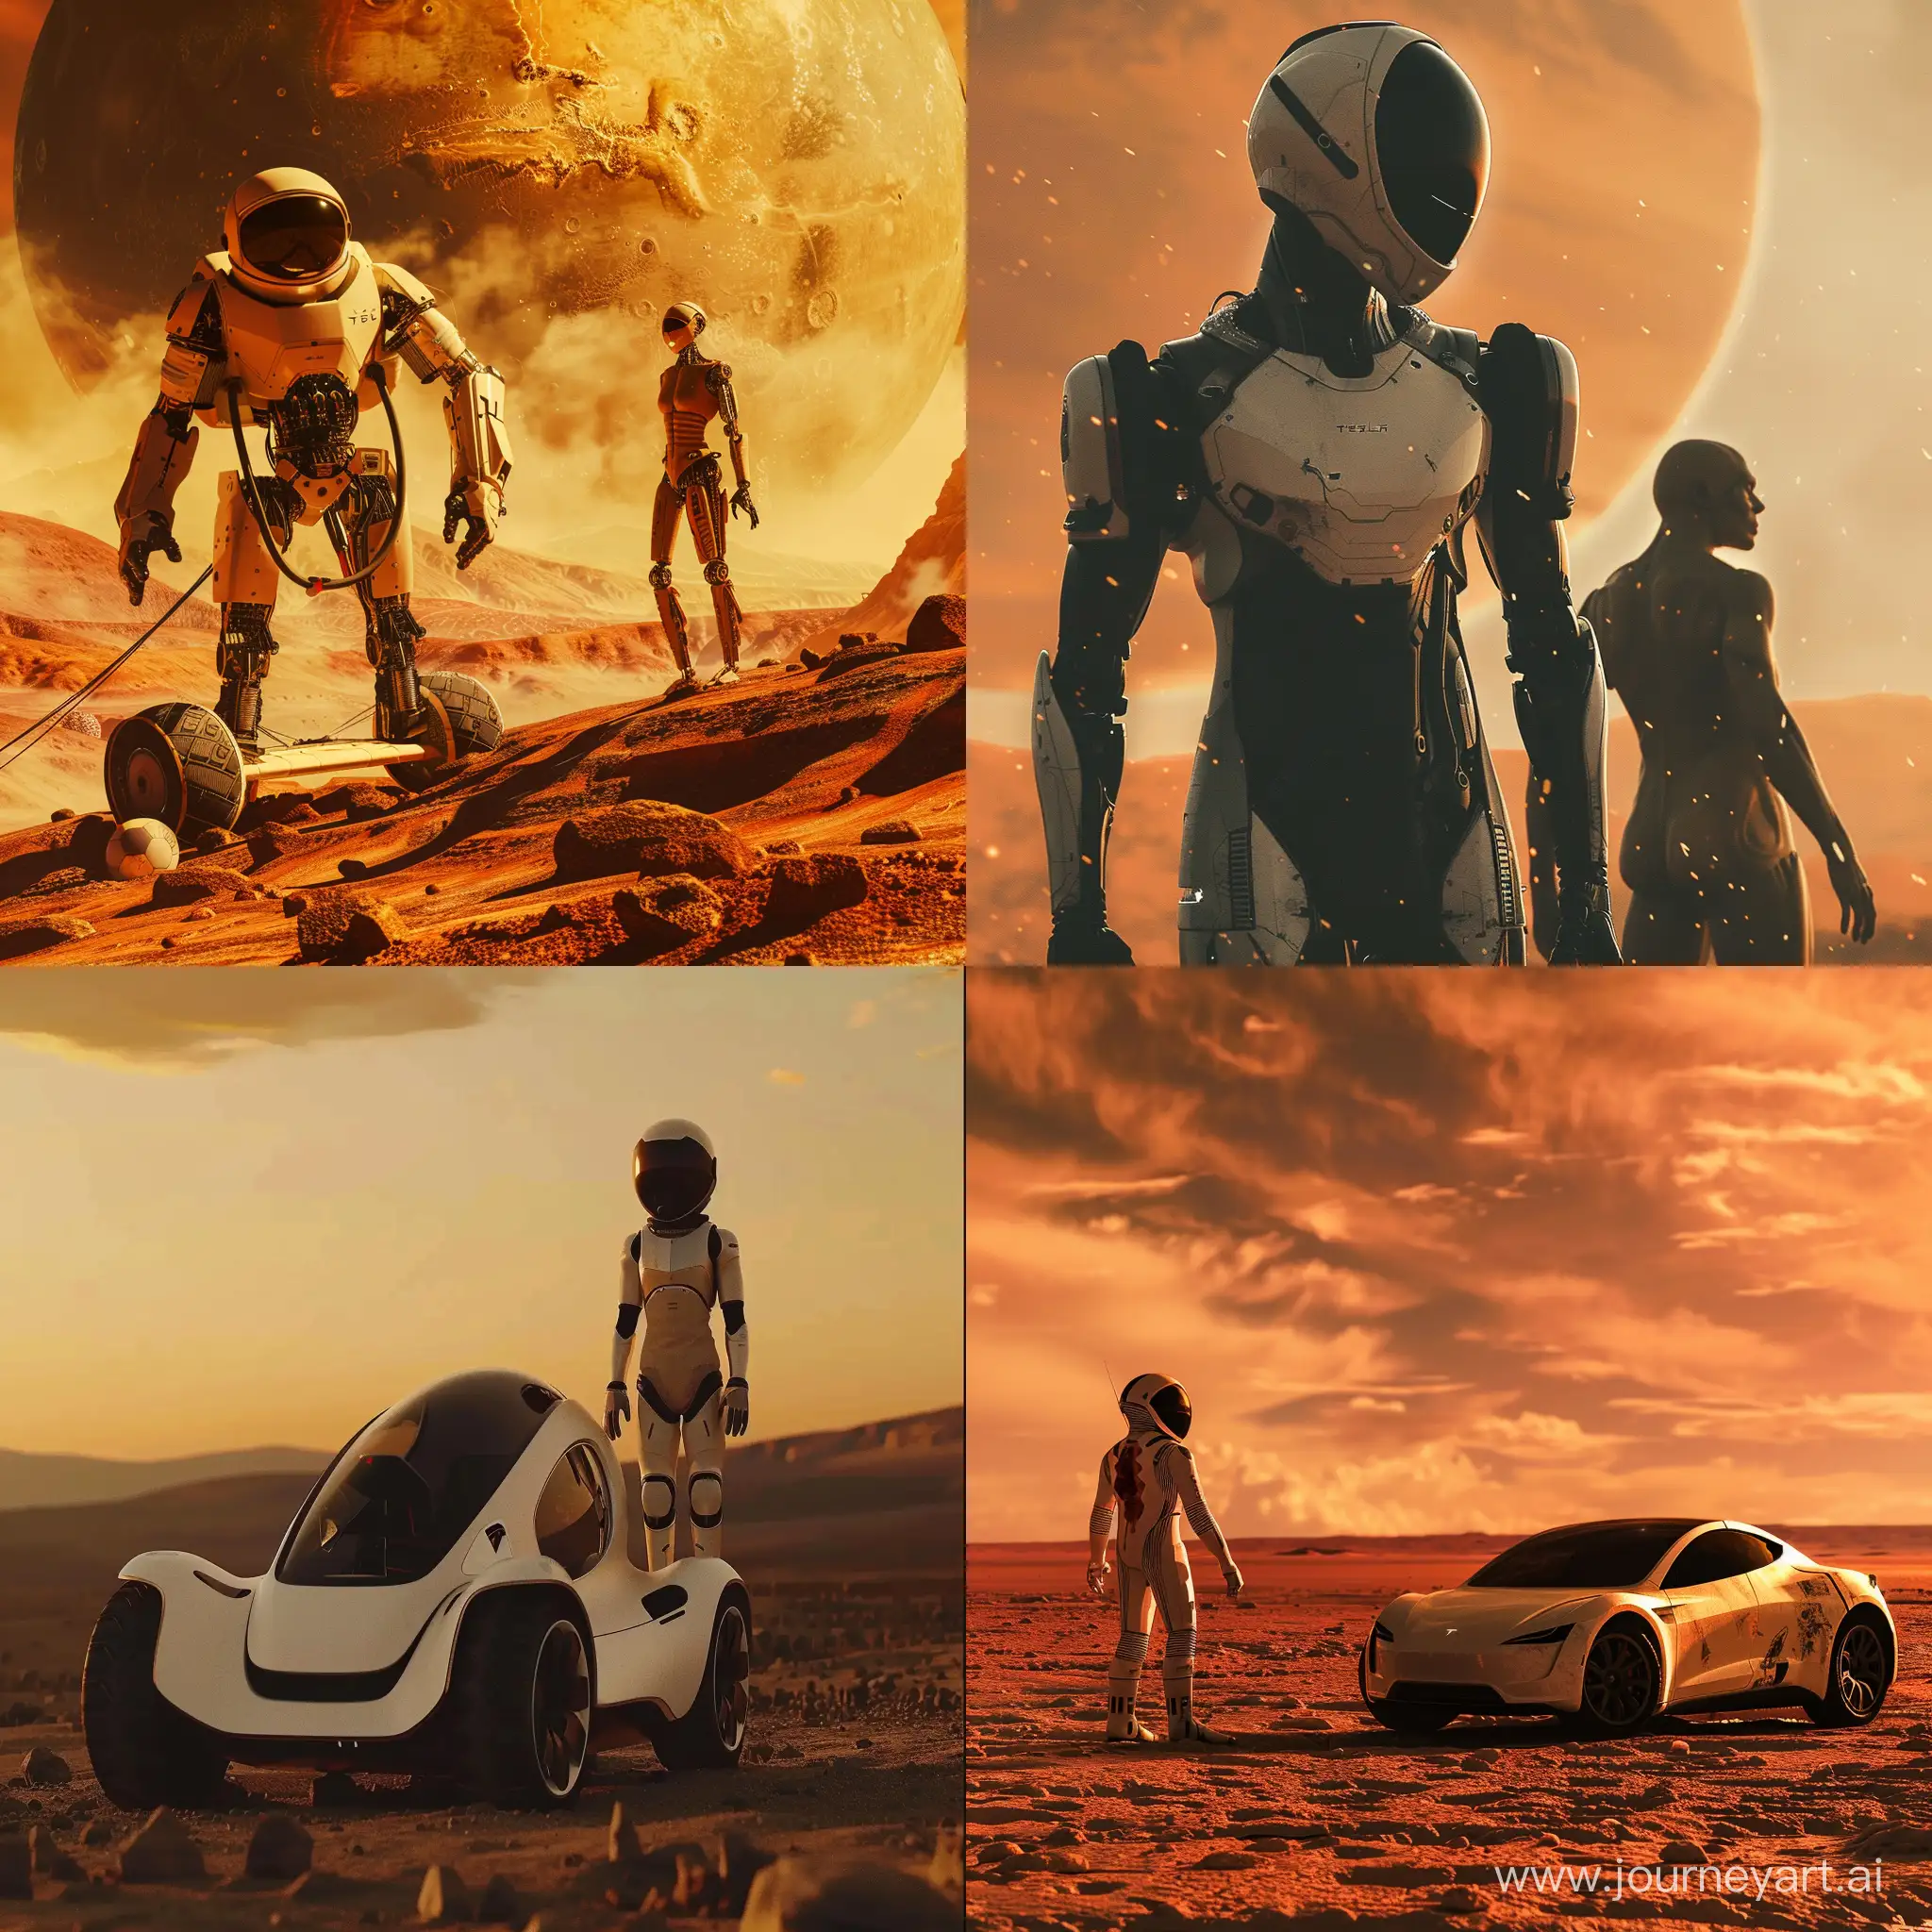 Futuristic-Exploration-Tesla-X-Robot-and-Unsuited-Human-on-Venus